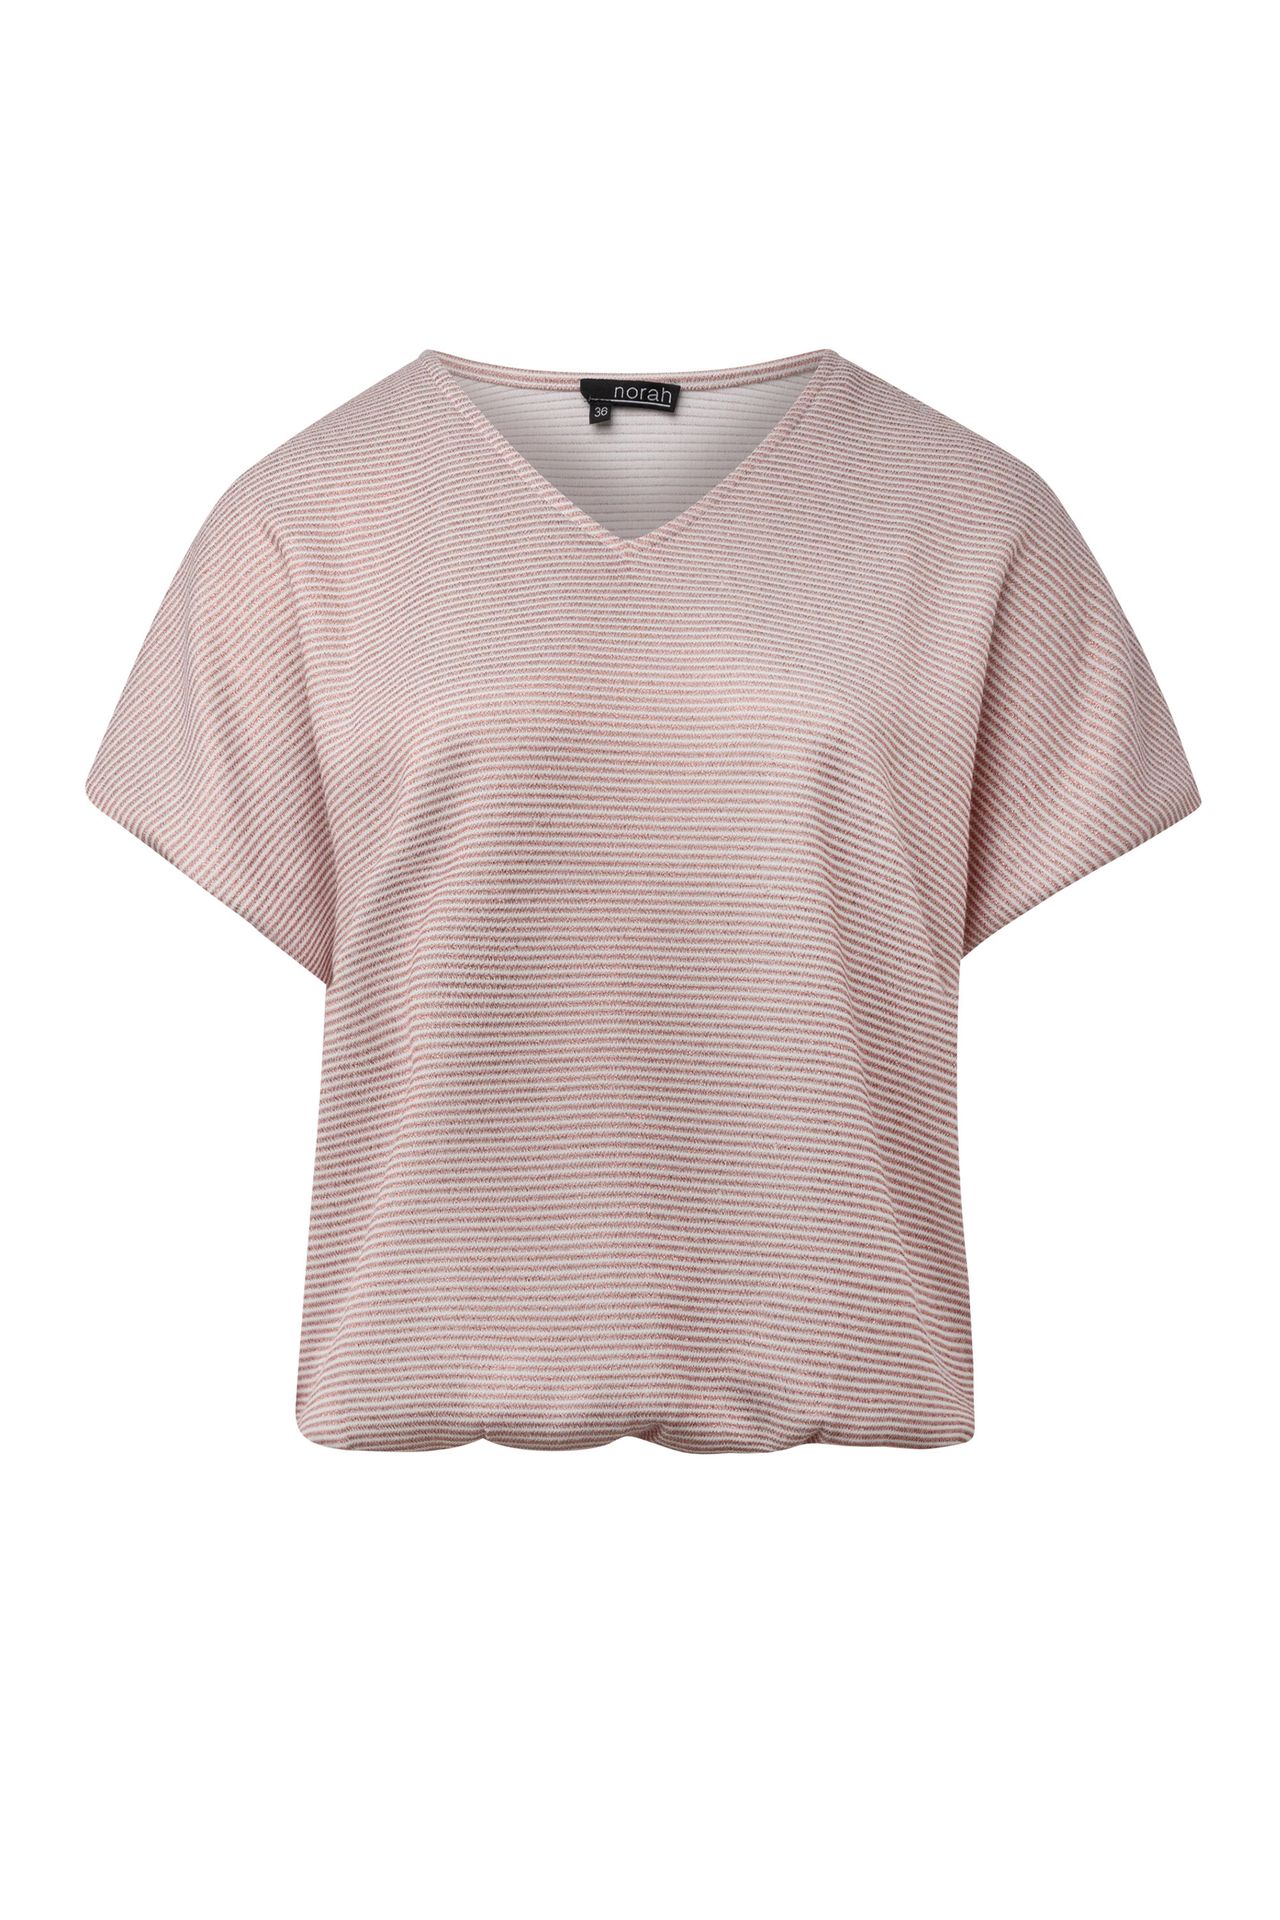  Roze shirt met glitters pink/white 214770-931-46